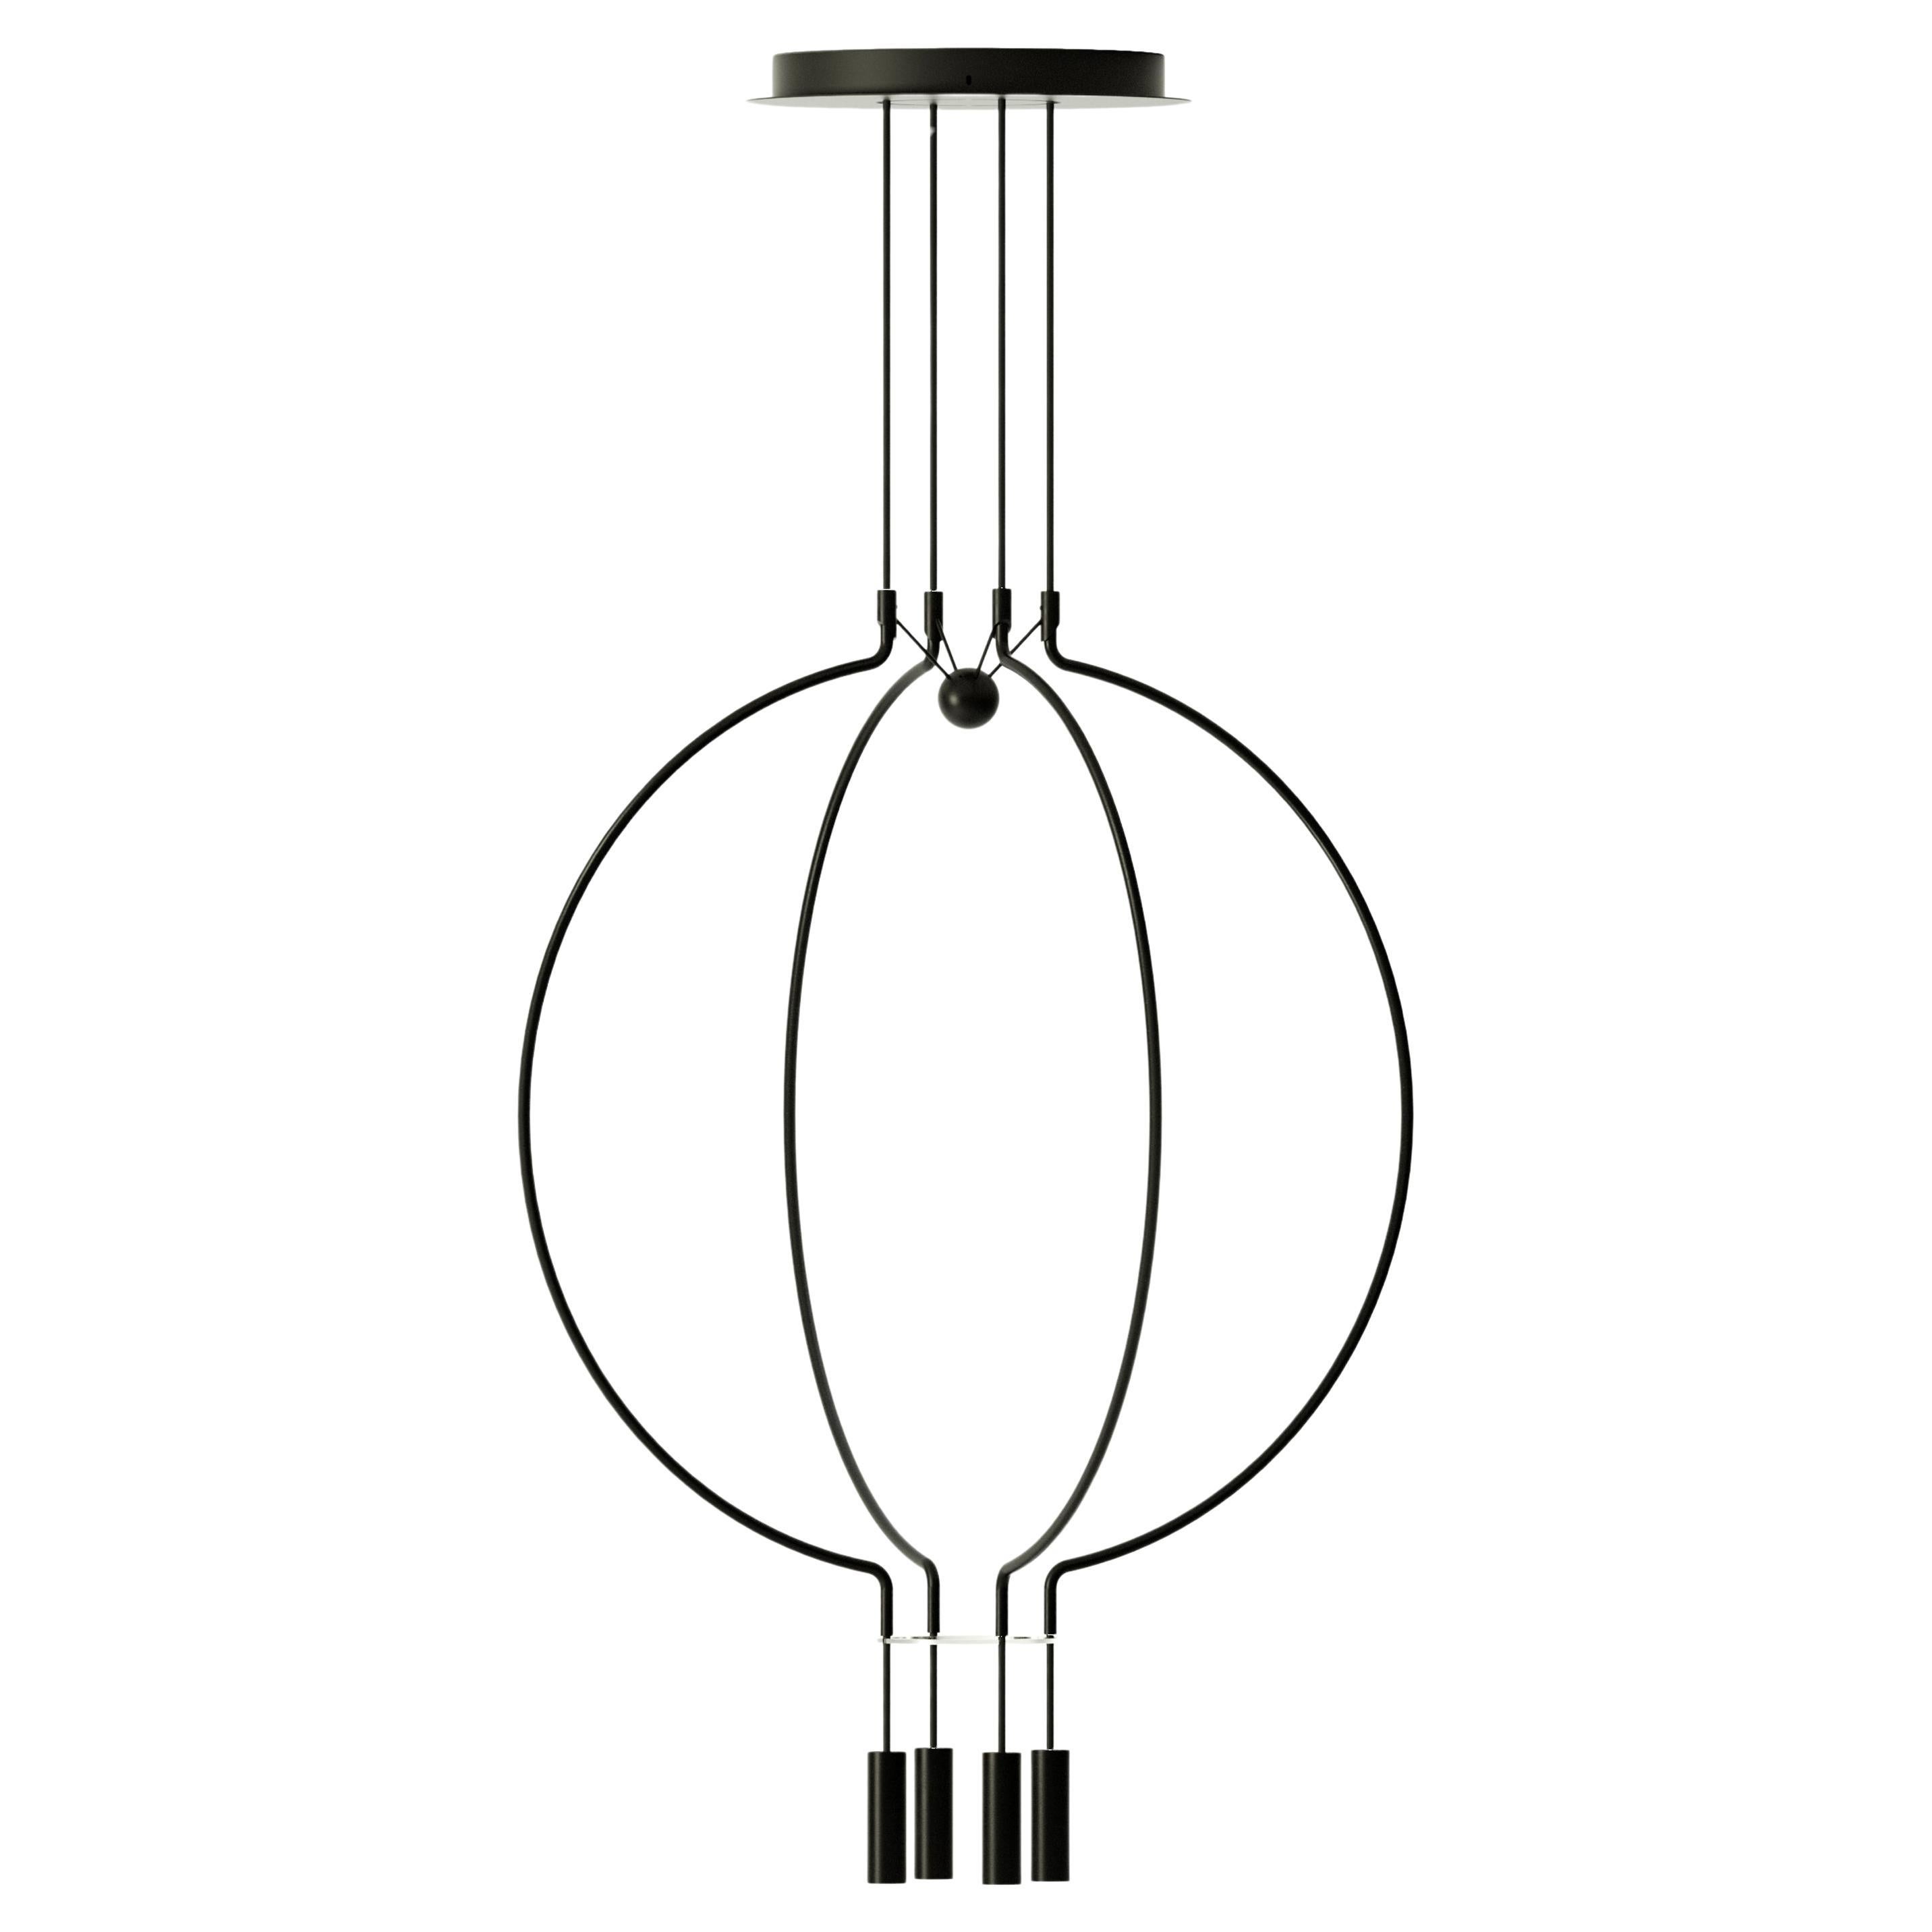 Axolight Liaison Model M4 Pendant Lamp in Black/Black by Sara Moroni For Sale